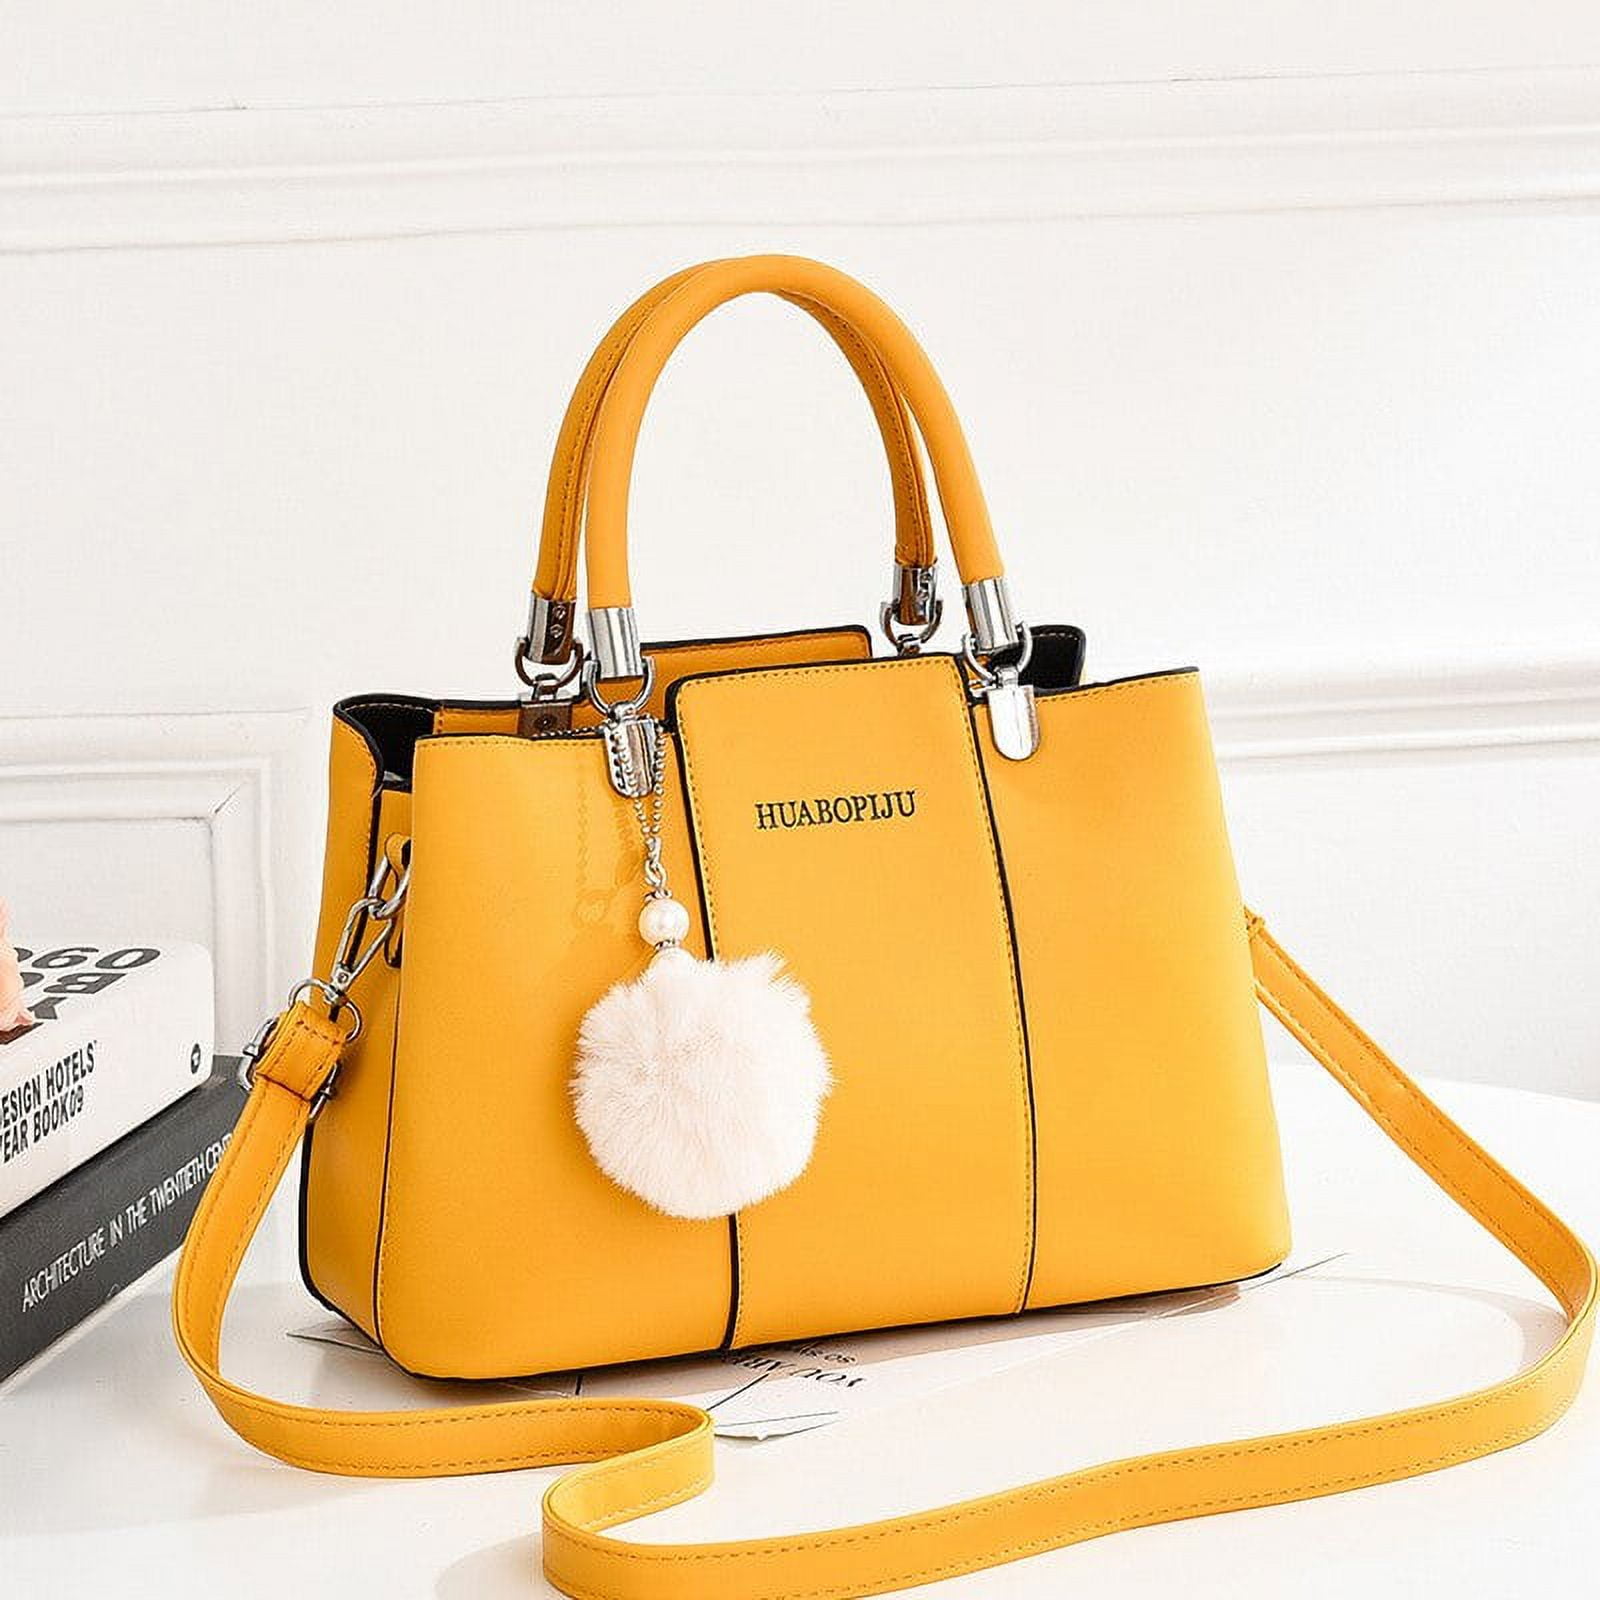 Affordable Designer Bags Under $500 - Cheap Designer Handbags